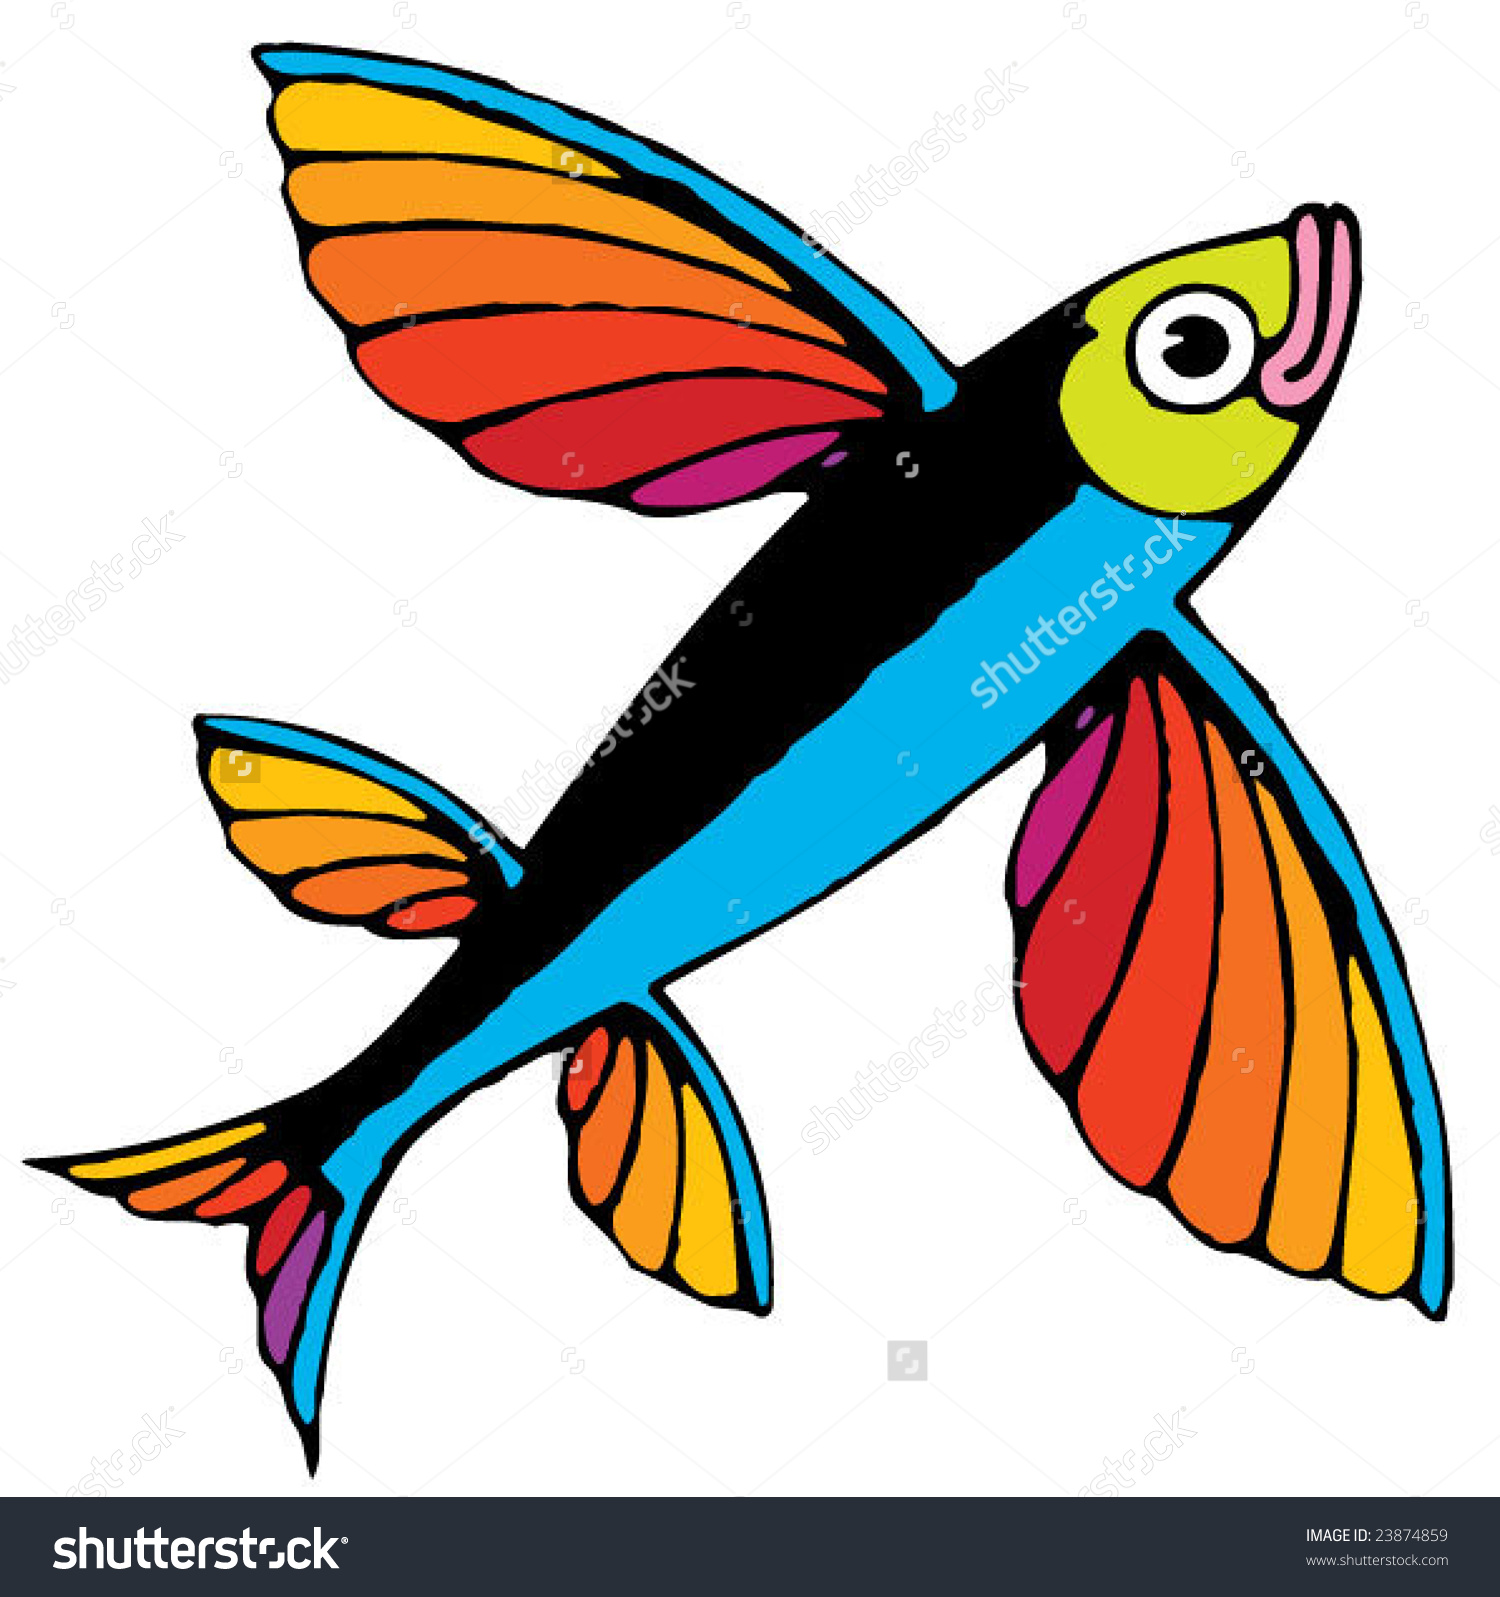 Flying Fish Stock Vector 23874859.